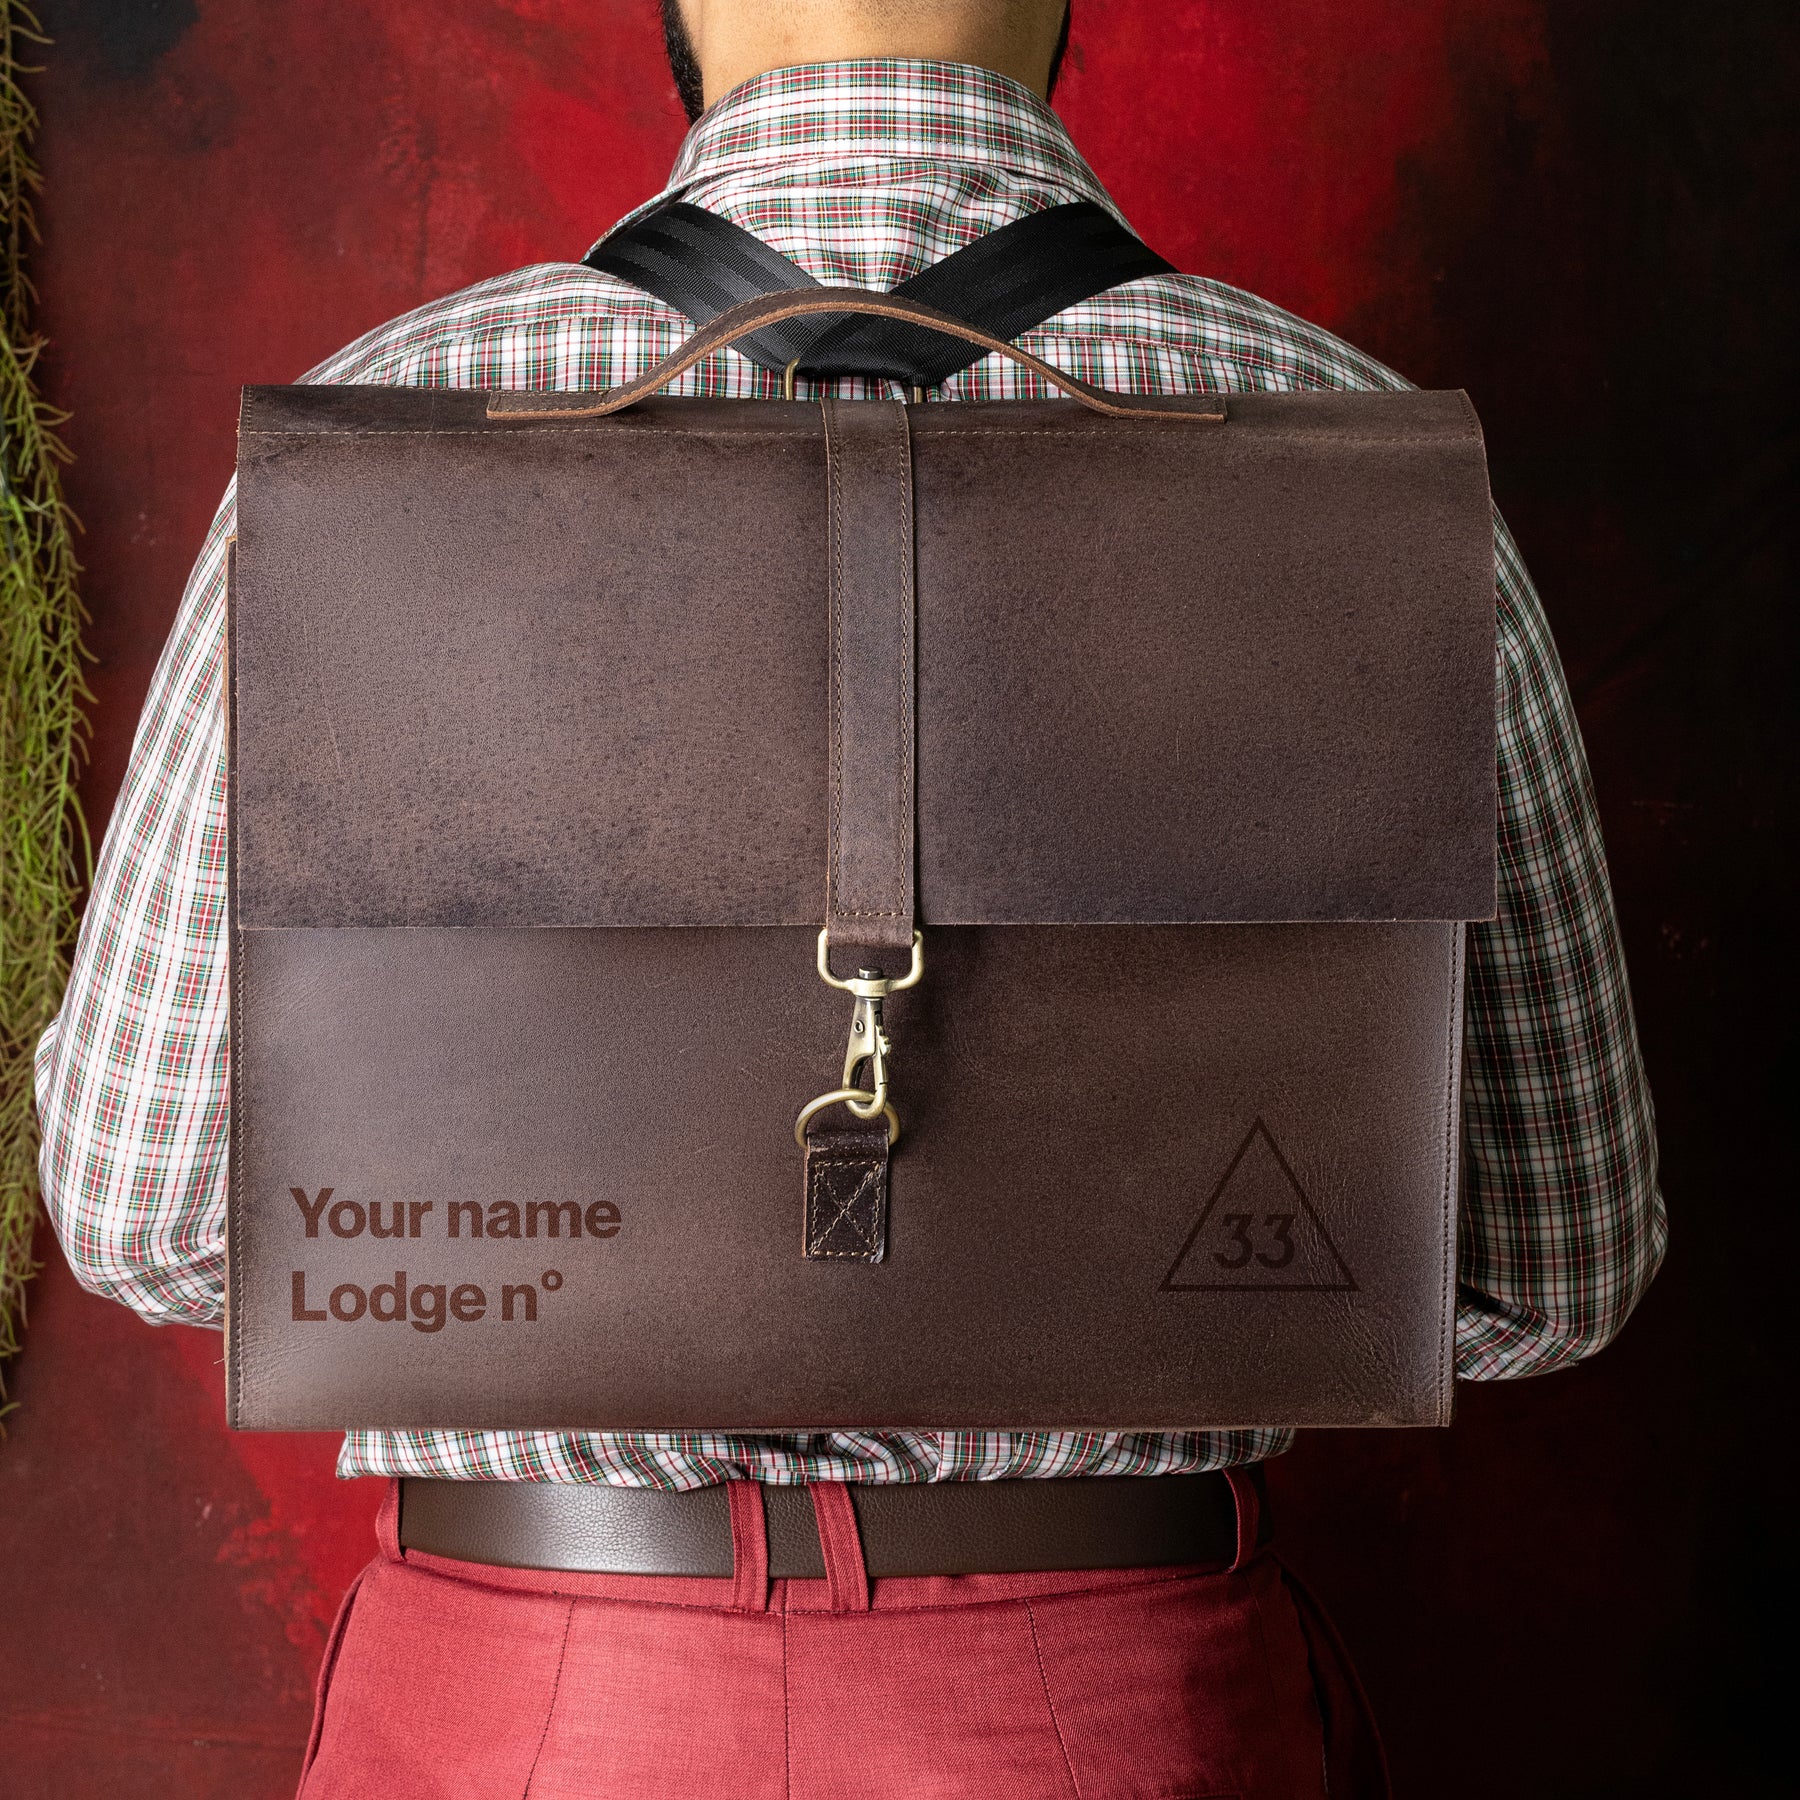 33rd Degree Scottish Rite Briefcase - Genuine Cow Leather Convertible Bag - Bricks Masons